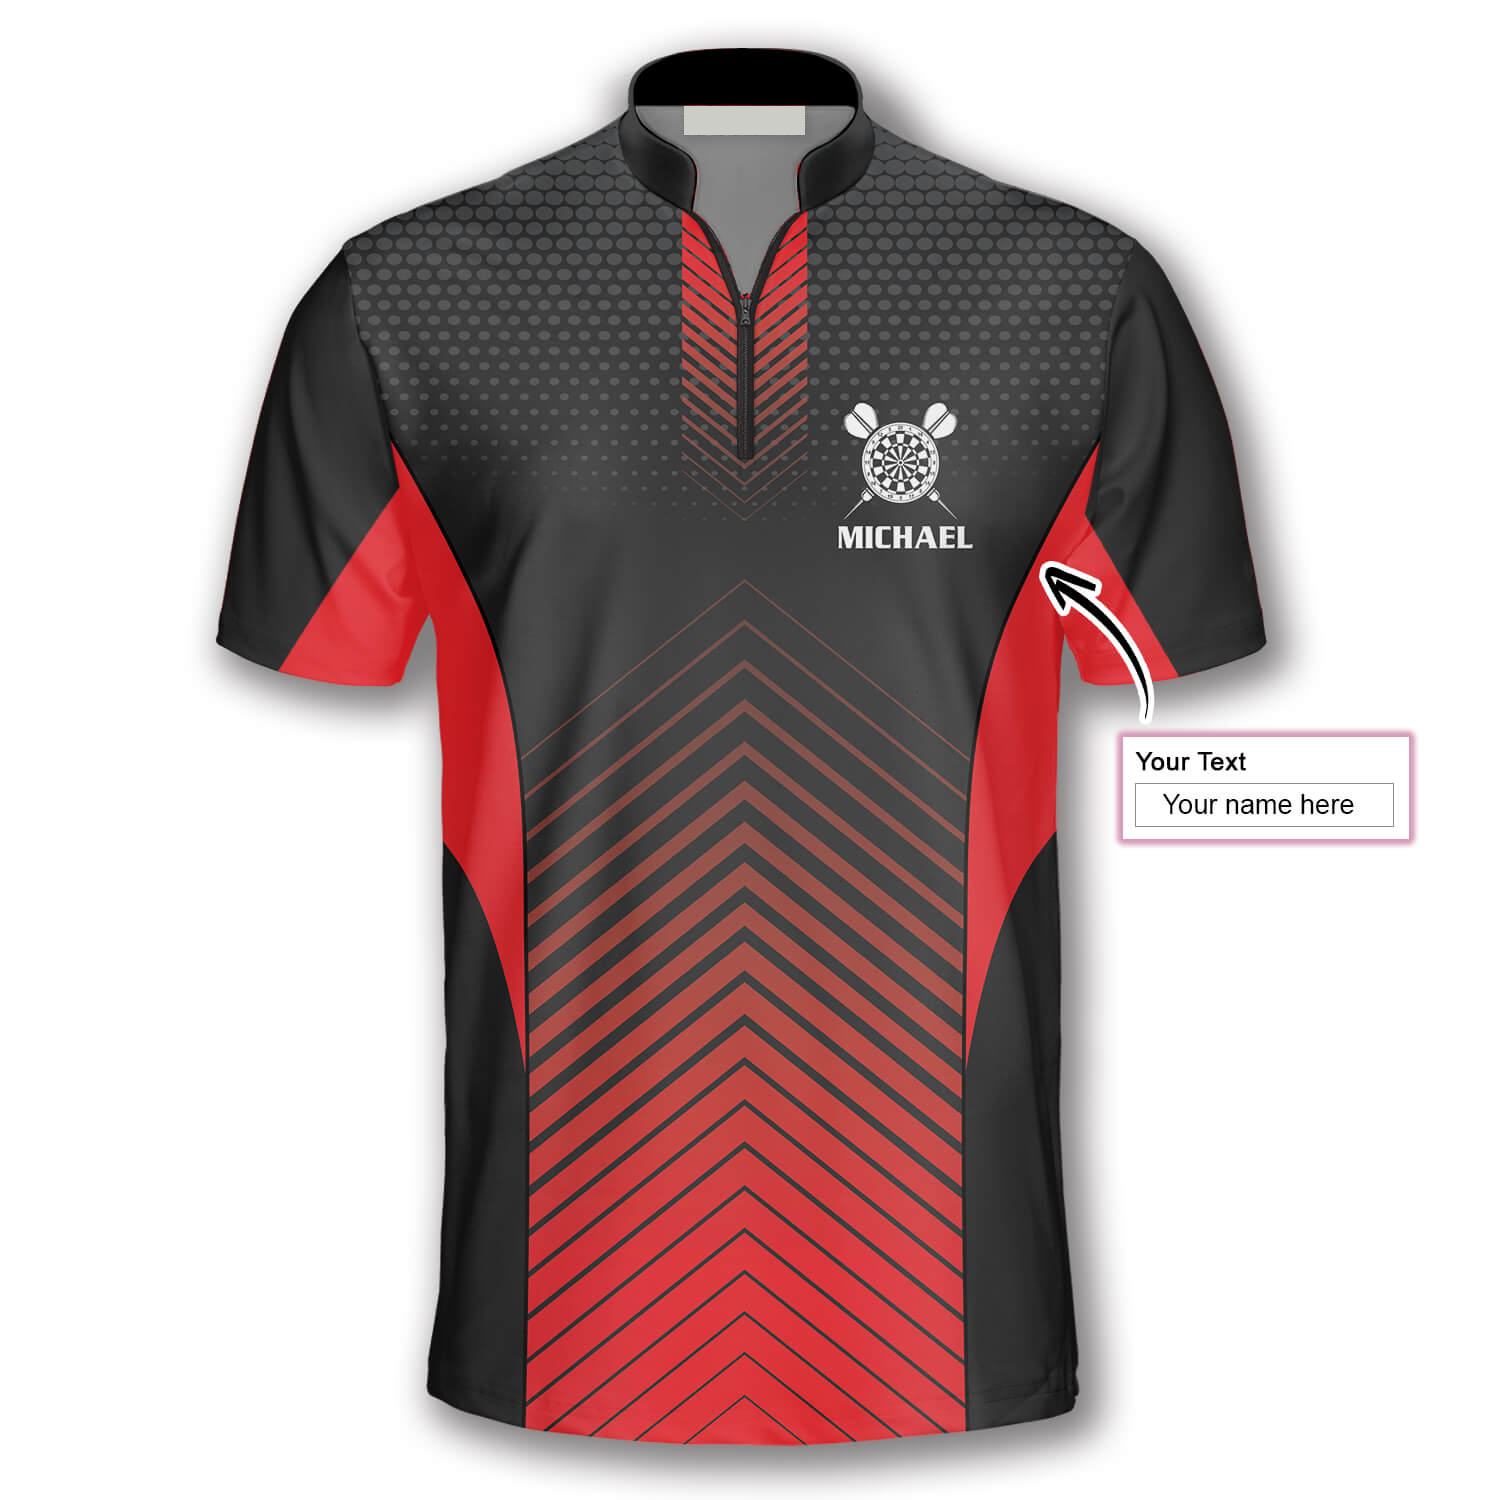 Red Black Darts Weekend Forecast Custom Darts Jerseys For Men/ Idea Gift for Dart Team